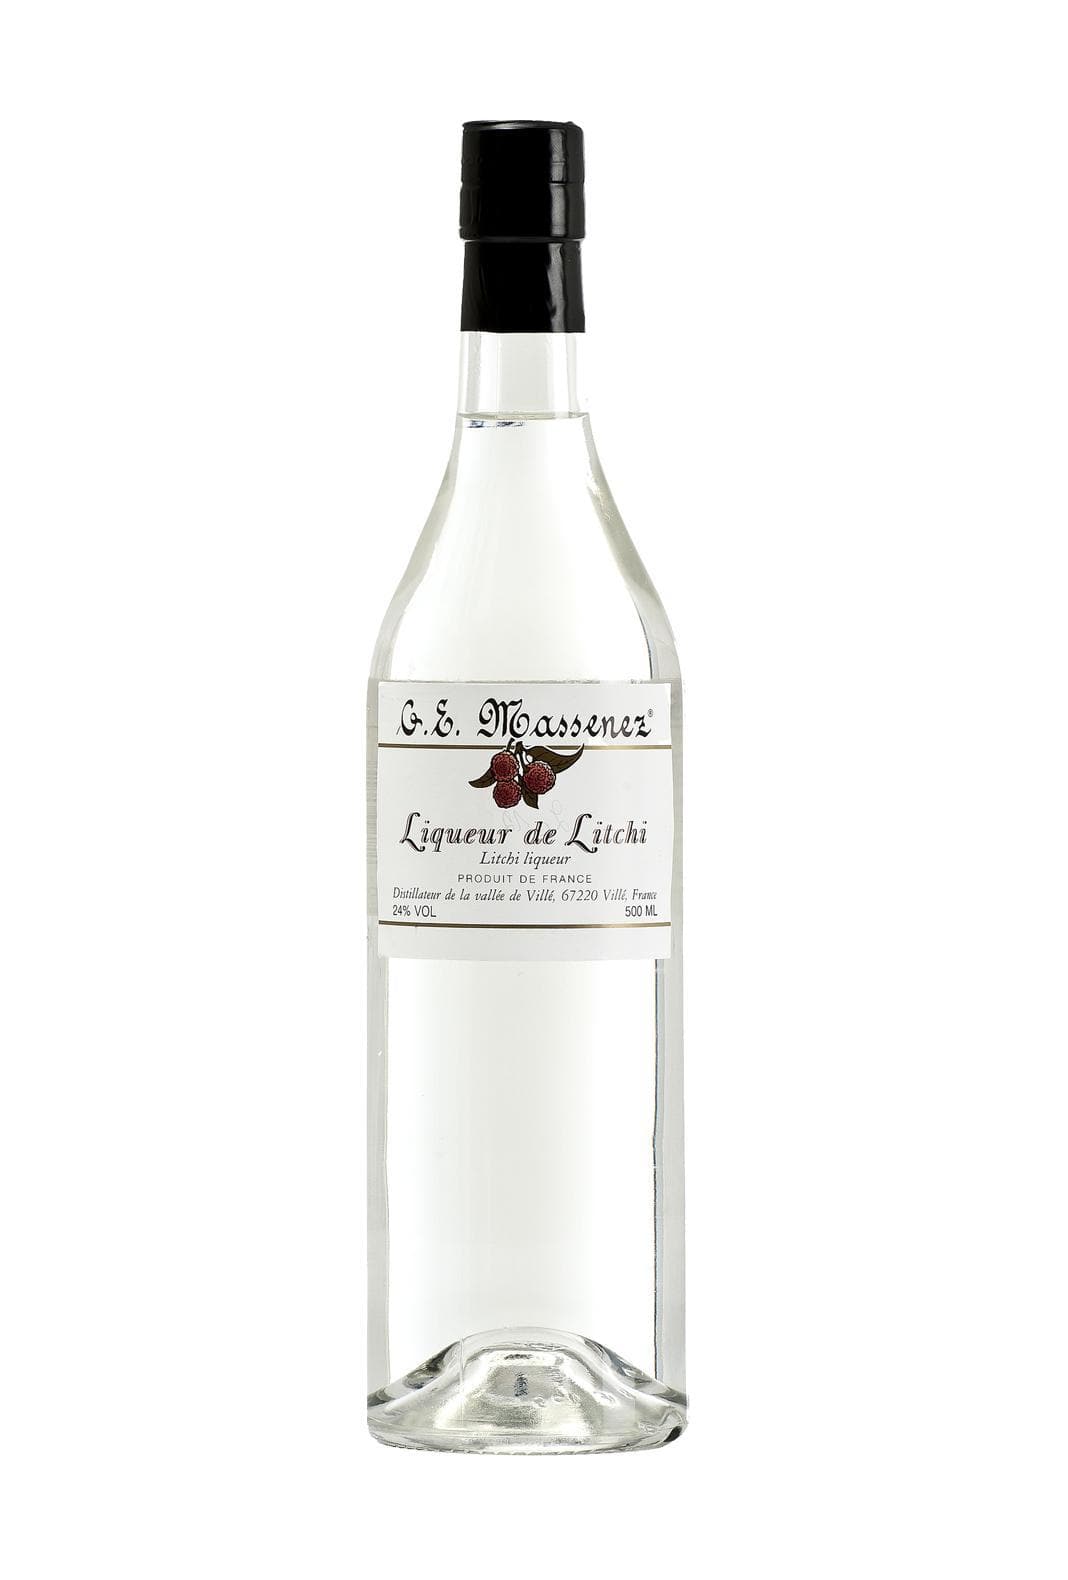 Massenez Liqueur de Litchi (Lychee) 24% 700ml | Liqueurs | Shop online at Spirits of France